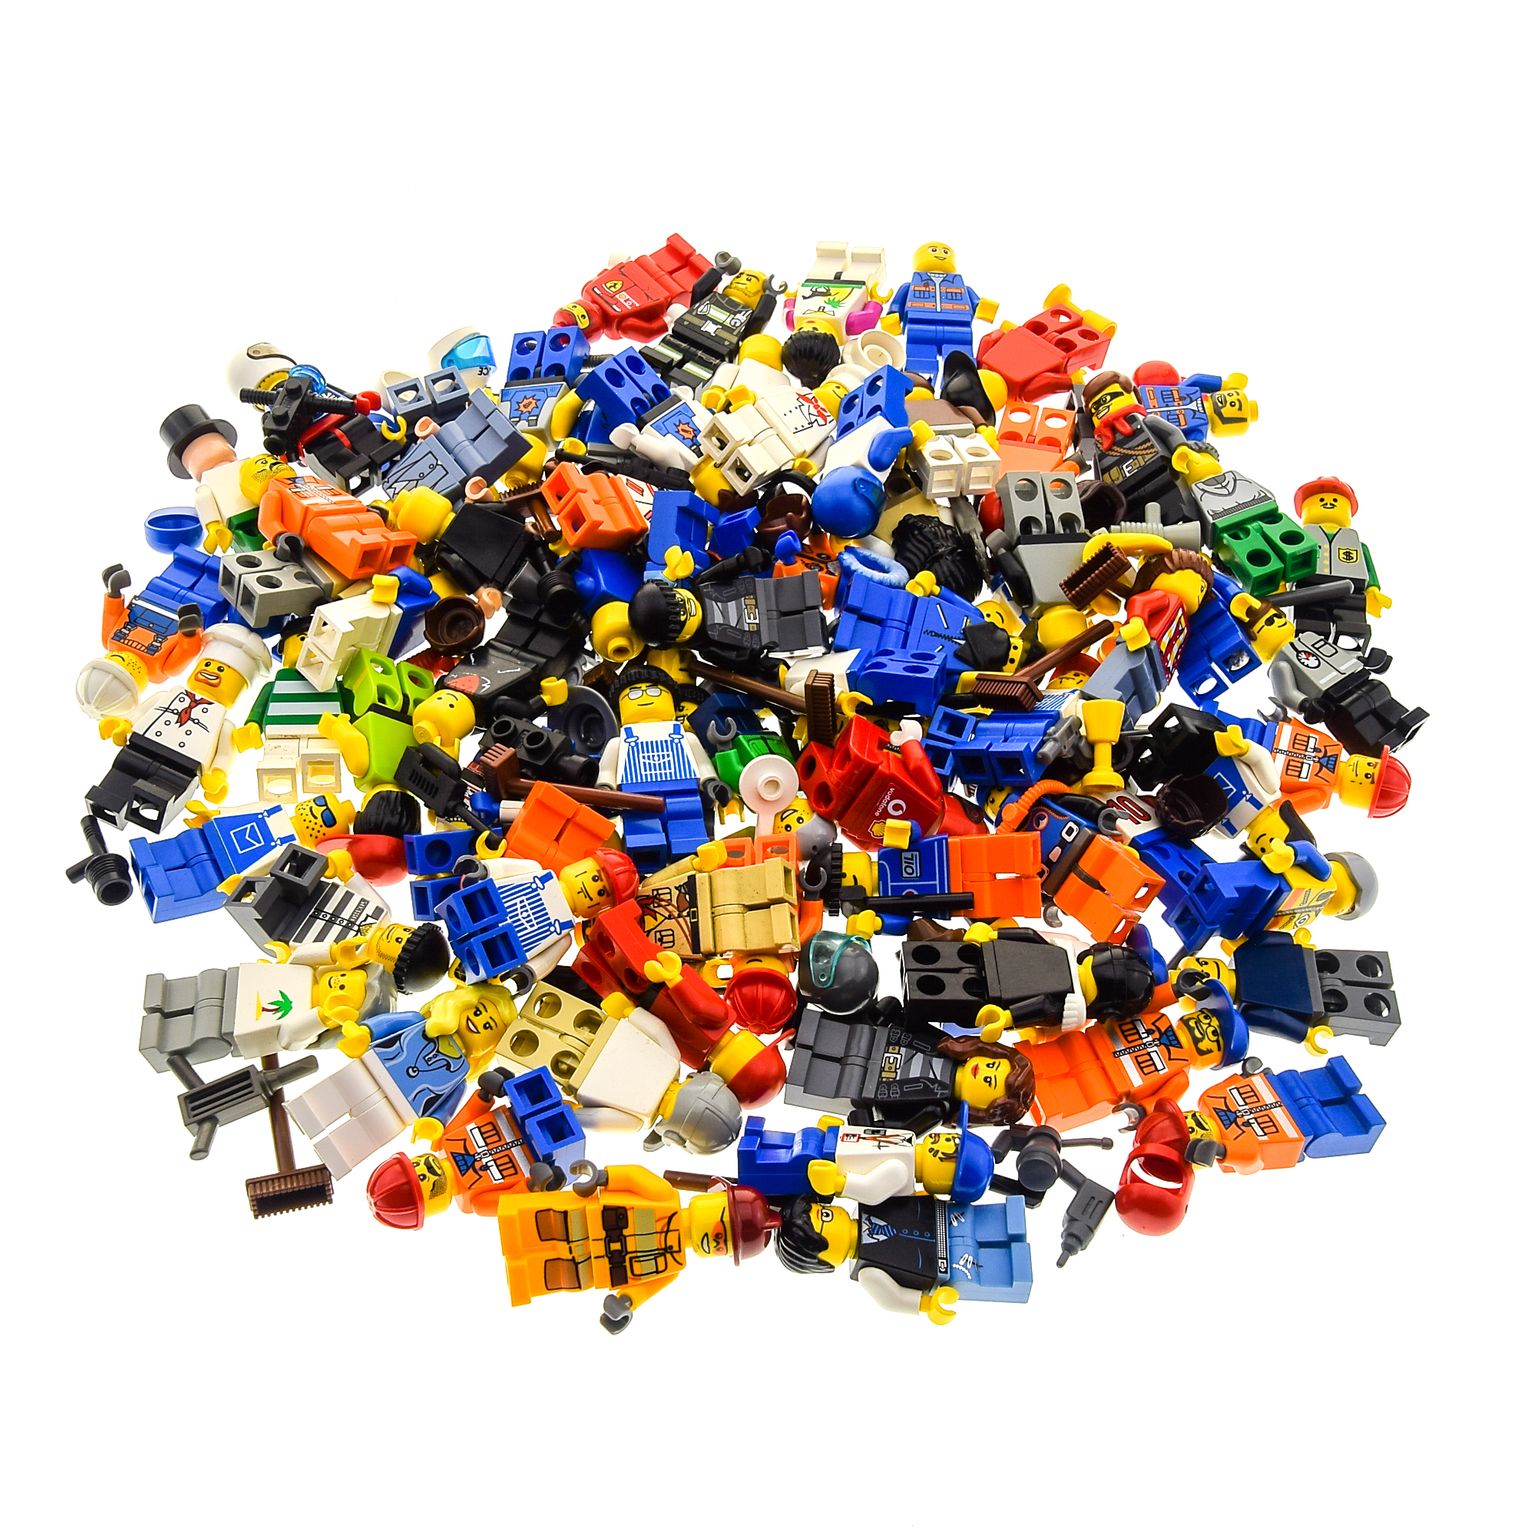 Lego Figur Town Mann dunkelblau kariertes Shirt braune Haare  twn069  10184 